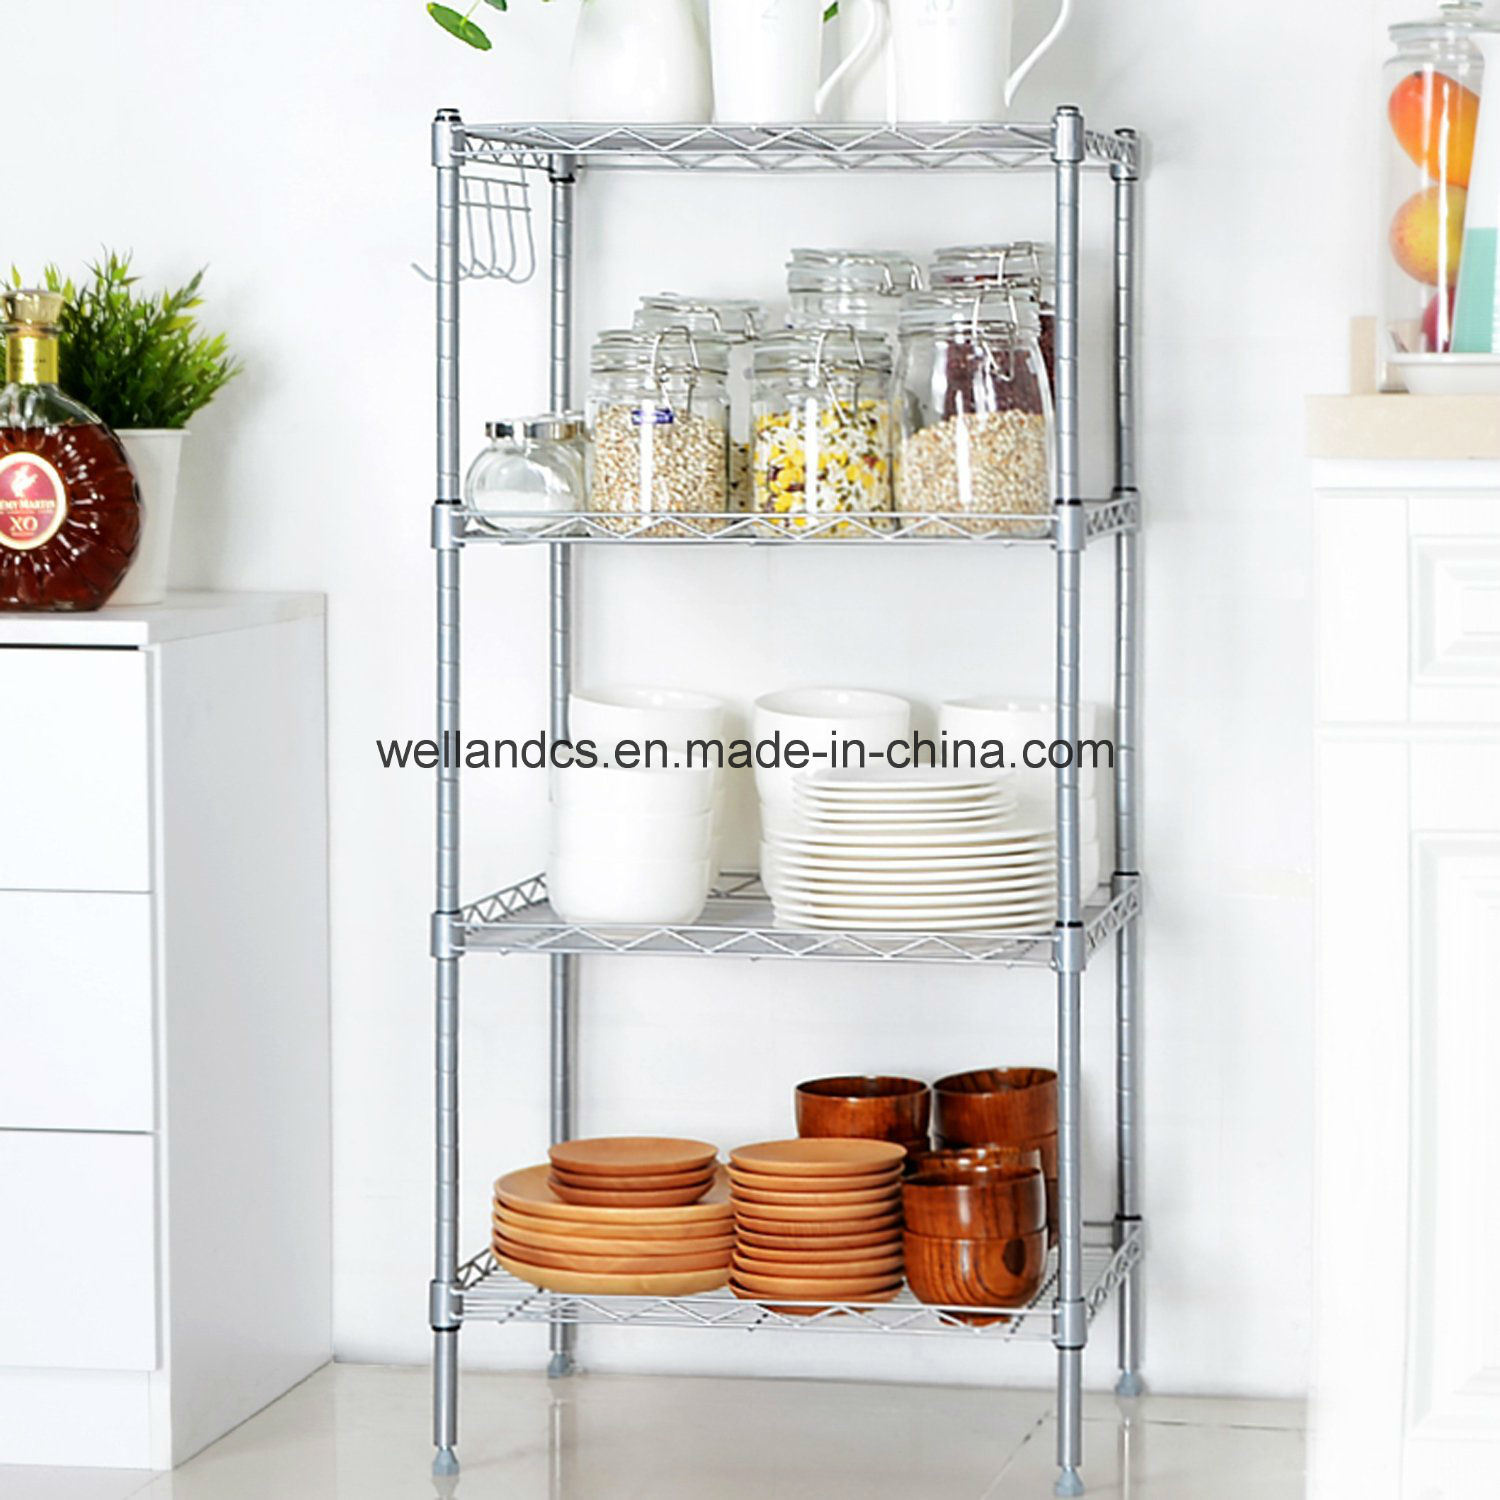 /proimages/2f0j00PTOfvEzChbcN/nsf-approval-4-shelves-metal-wire-silver-adjustable-kitchen-storage-plate-rack-with-hooks.jpg